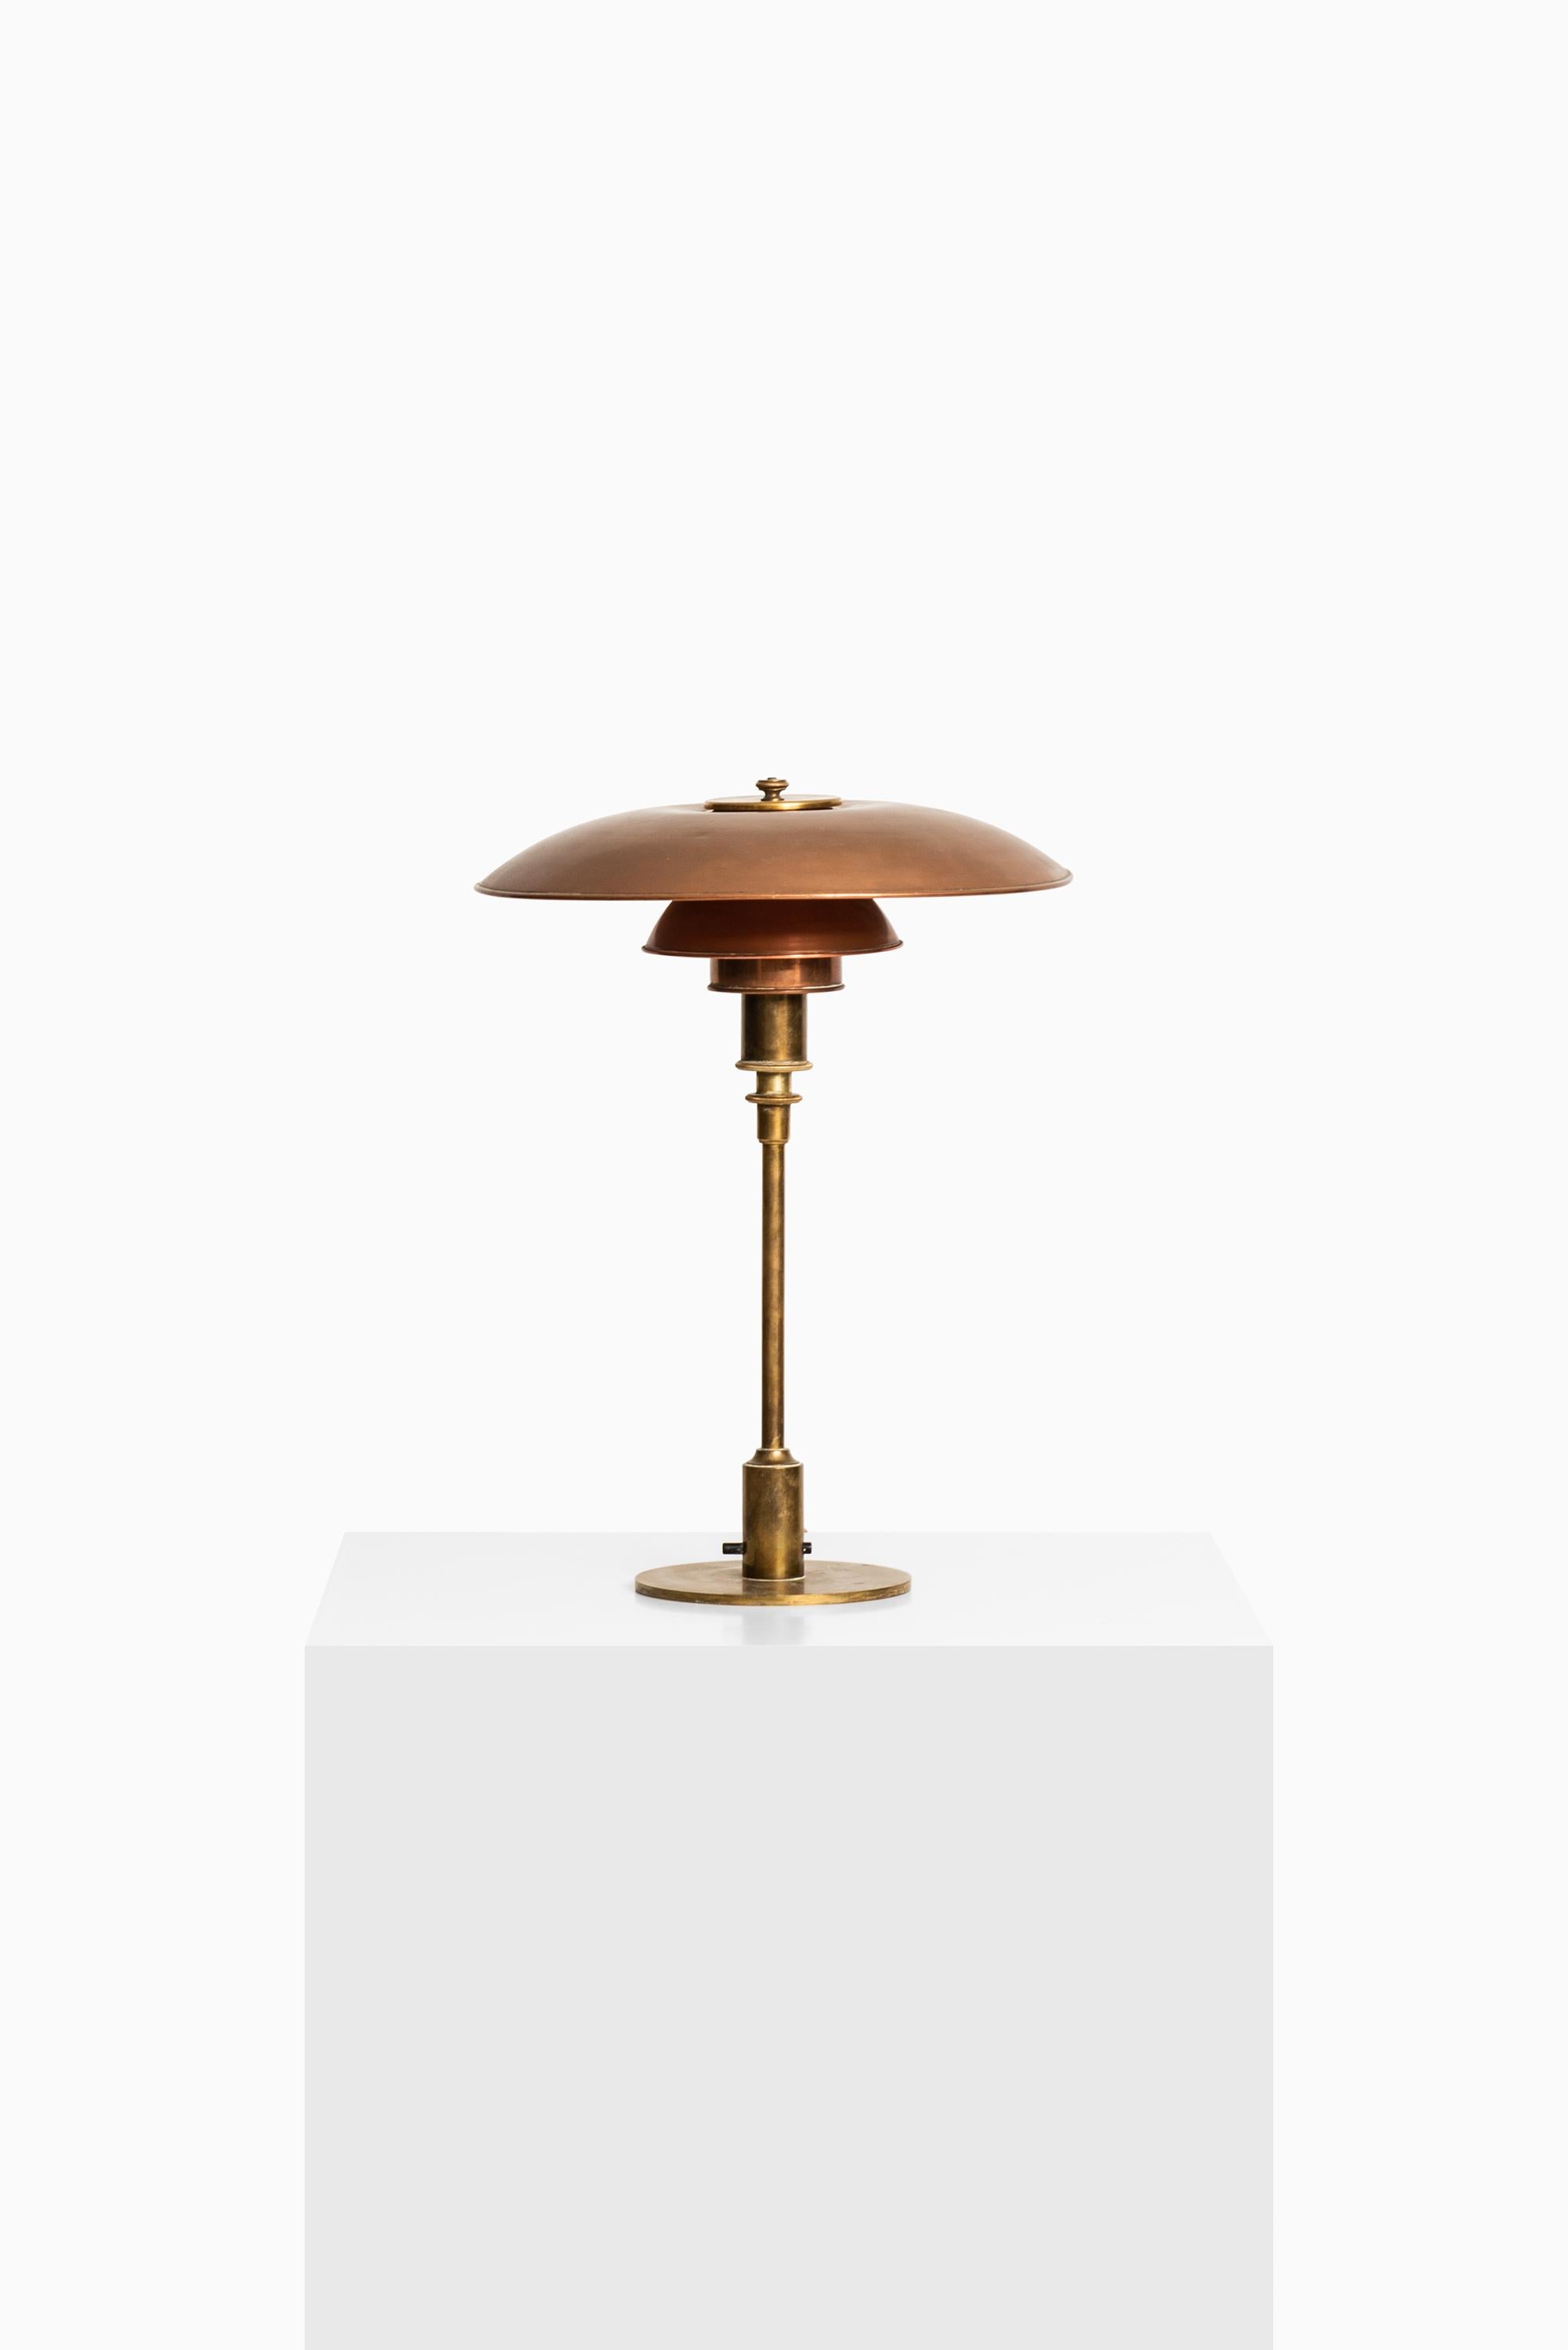 Scandinavian Modern Poul Henningsen Table Lamp Model PH 3½/2 Produced by Louis Poulsen in Denmark For Sale